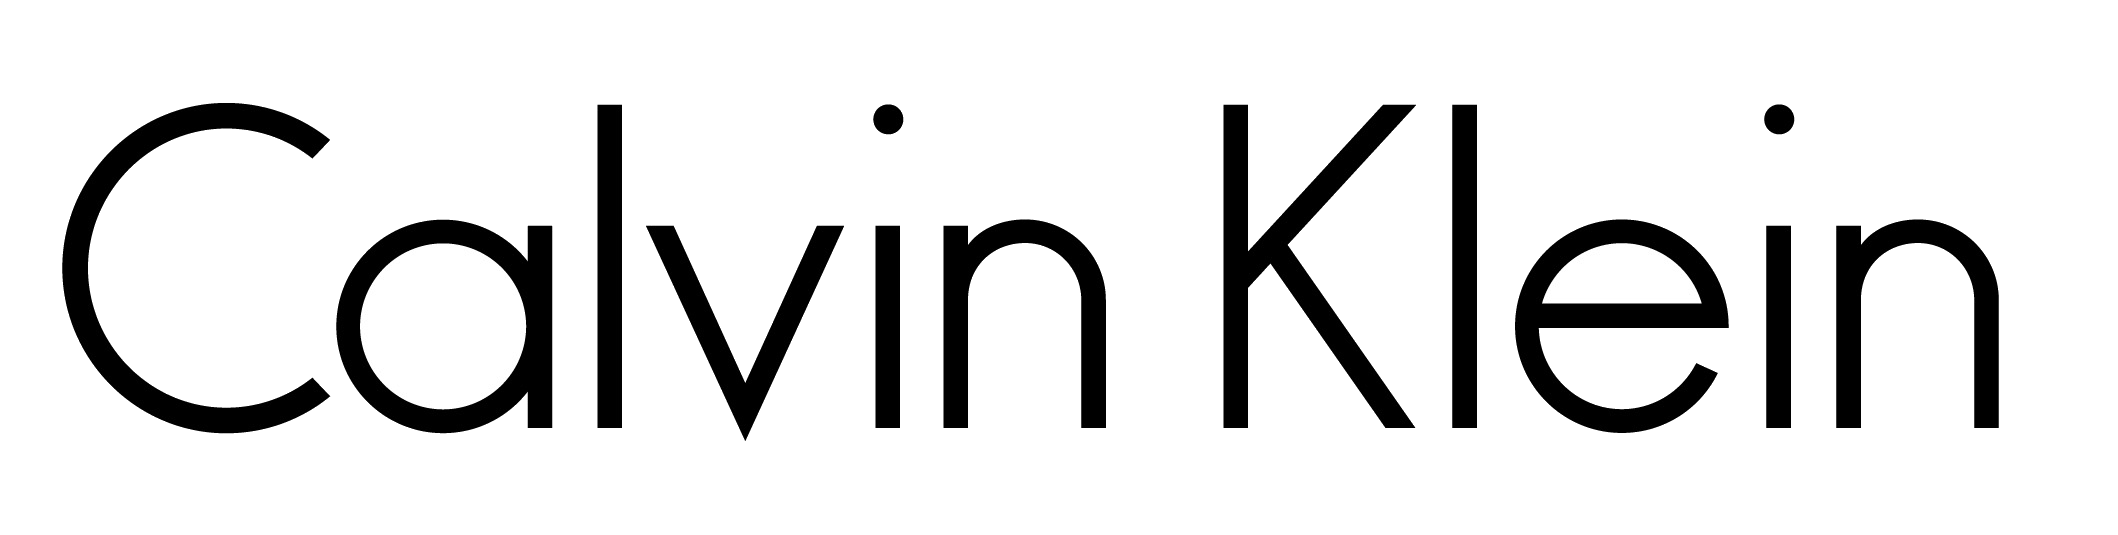 Calvin Klein logo PNG transparent image download, size: 2118x535px